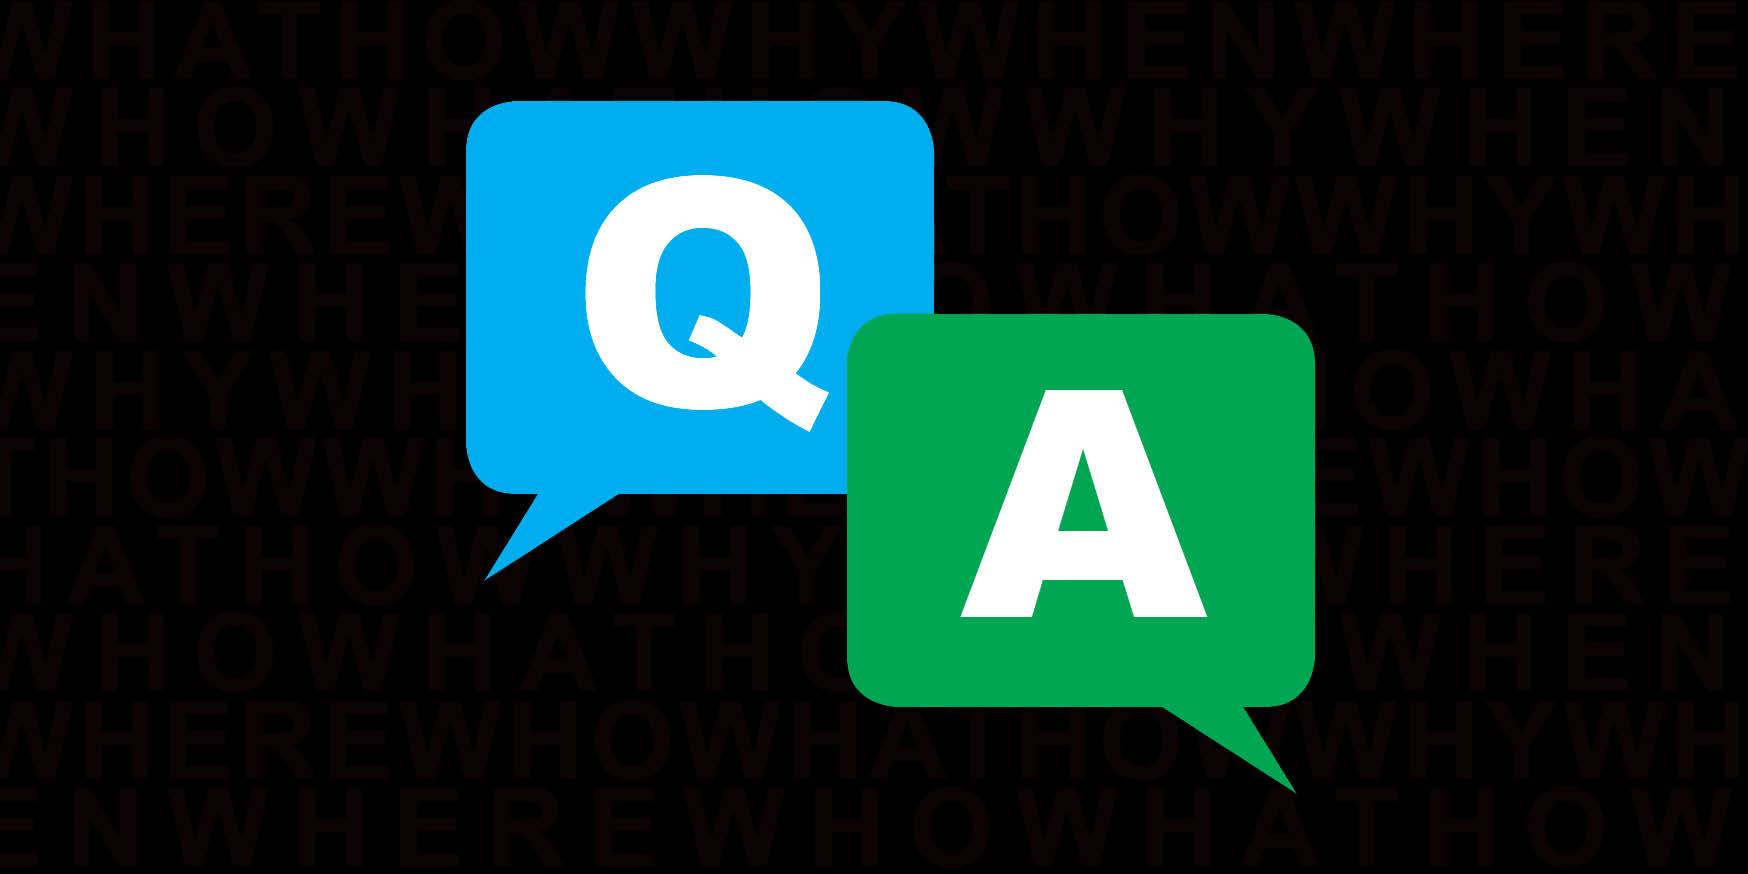 Q & A – 9:30 Service – 2018